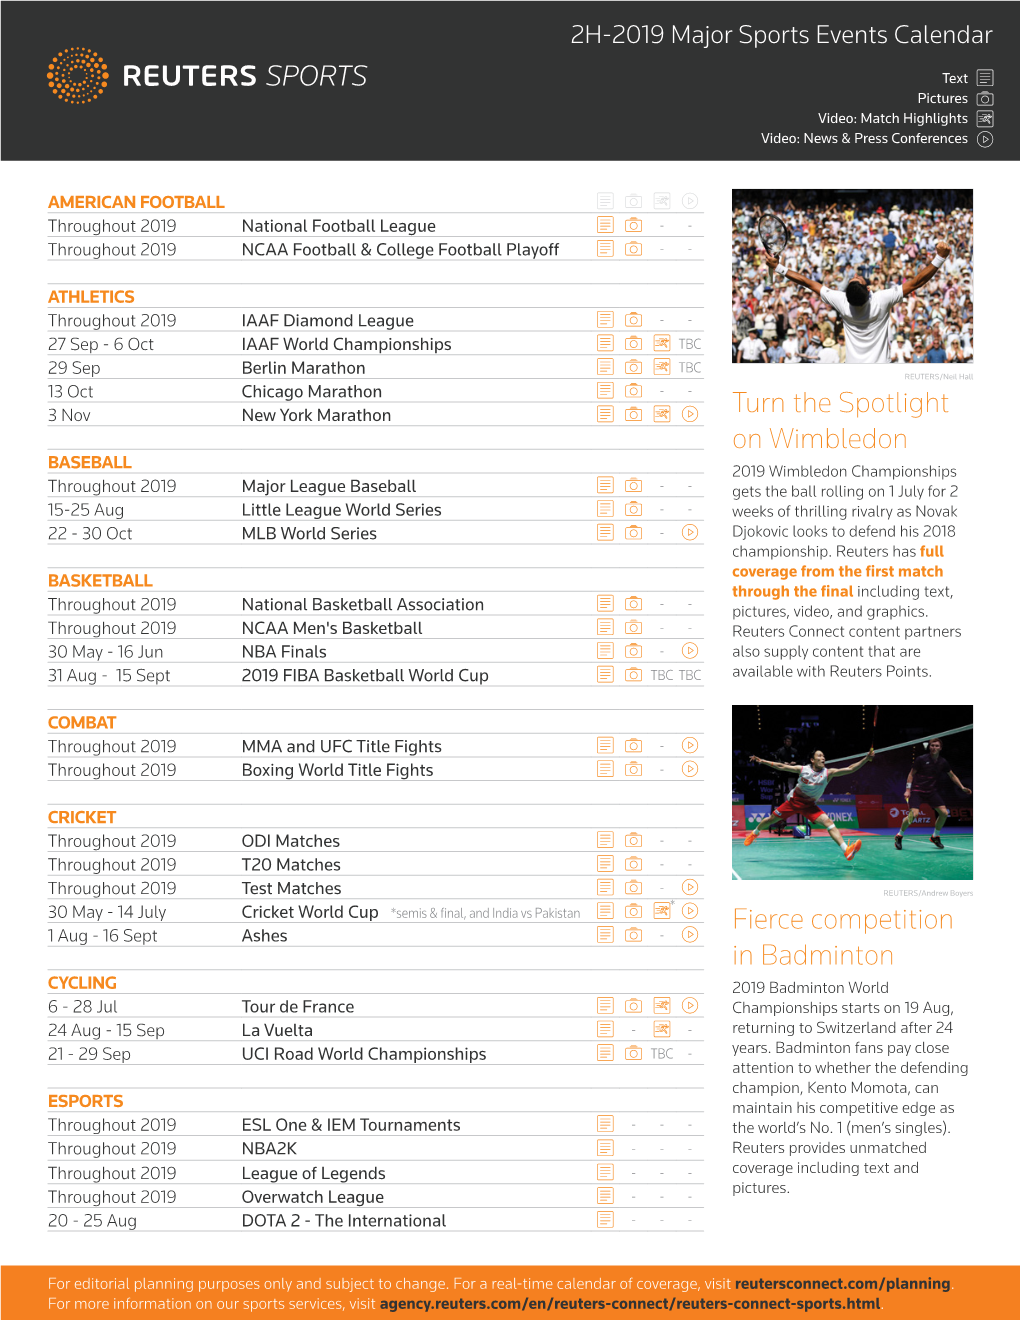 Sports Events Calendar